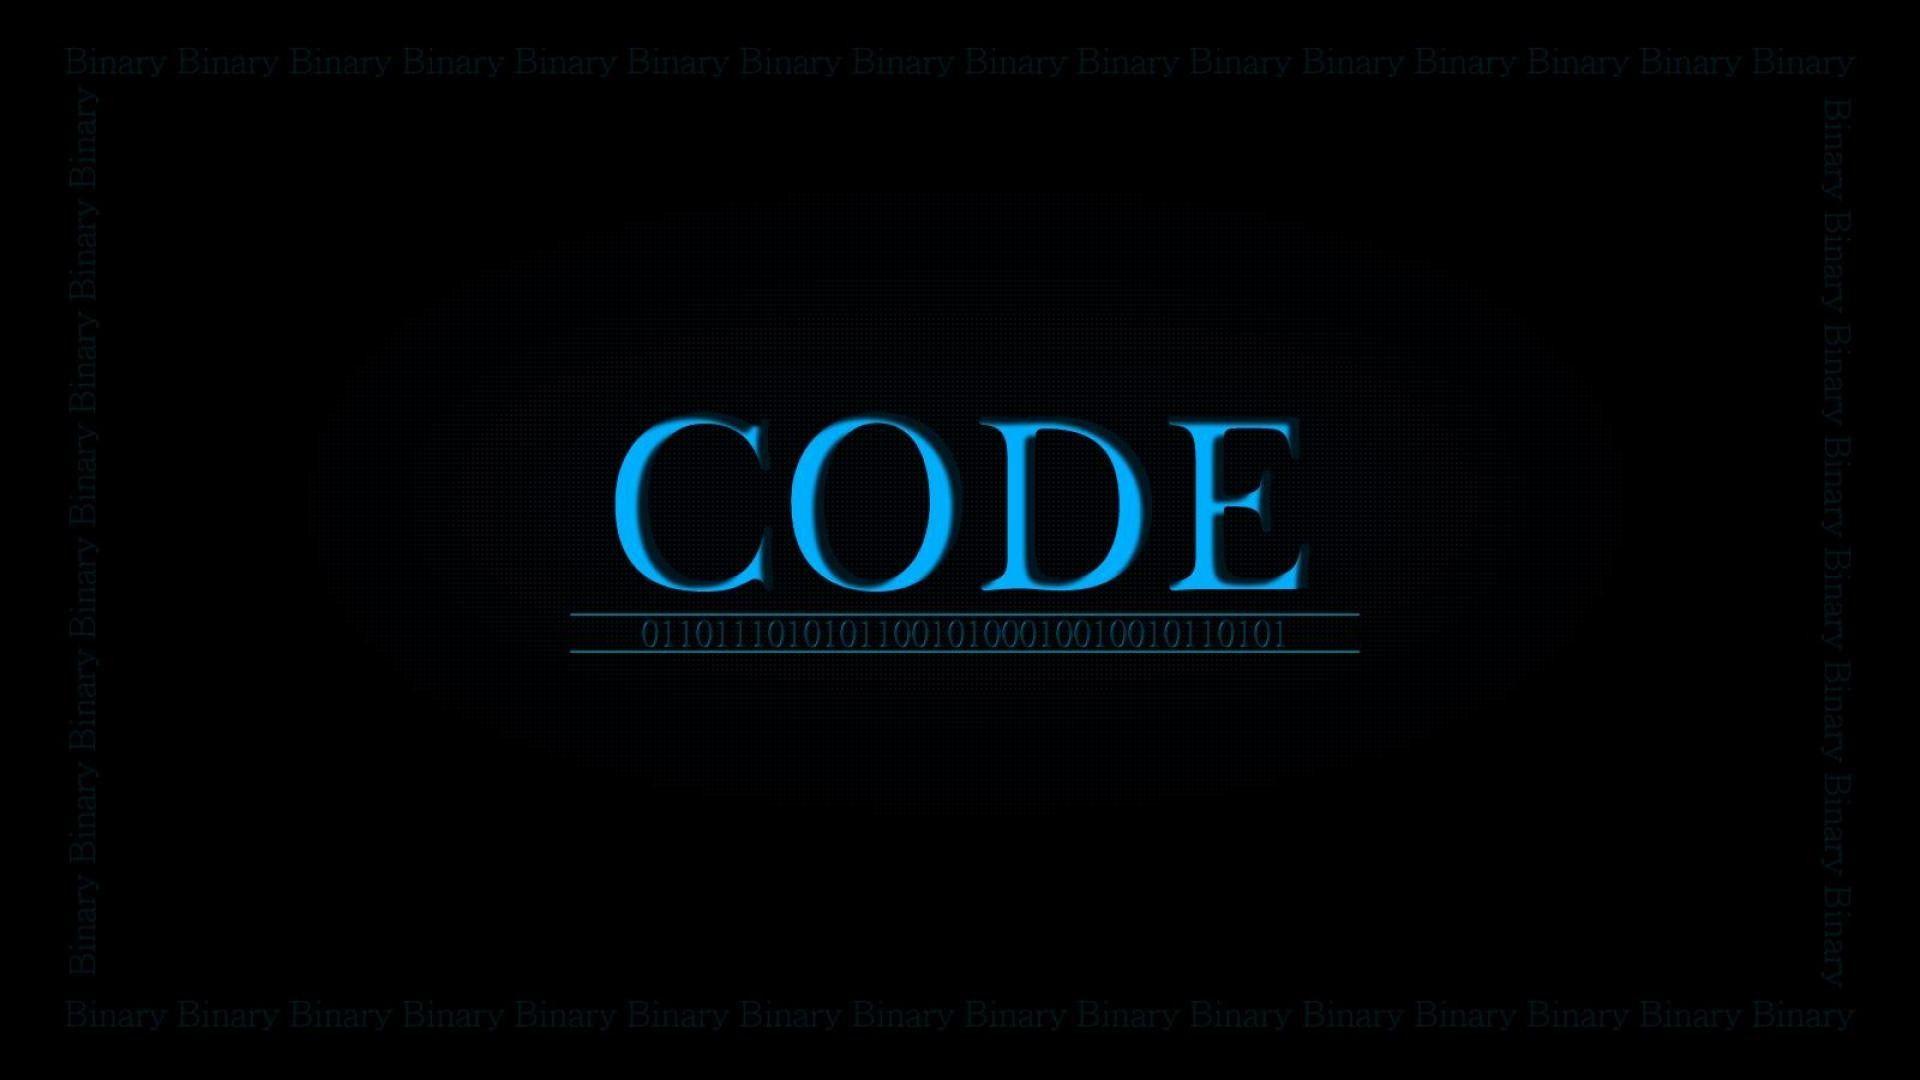 Computer Code Wallpapers - Top Free Computer Code Backgrounds